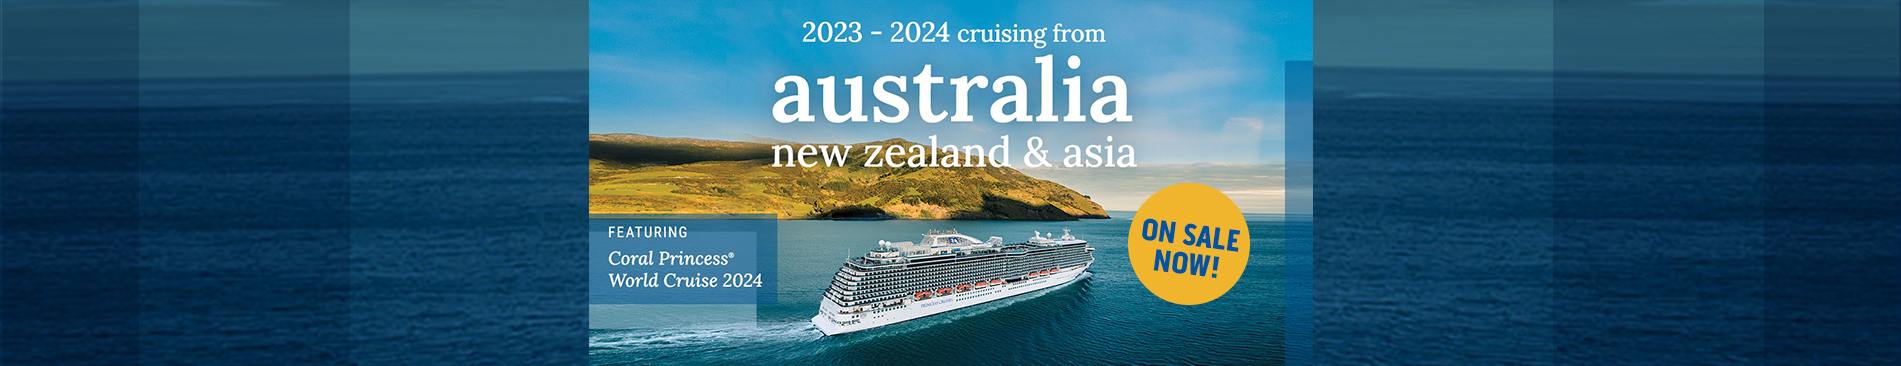 Princess 2023-2024 cruising from Australia on sale now